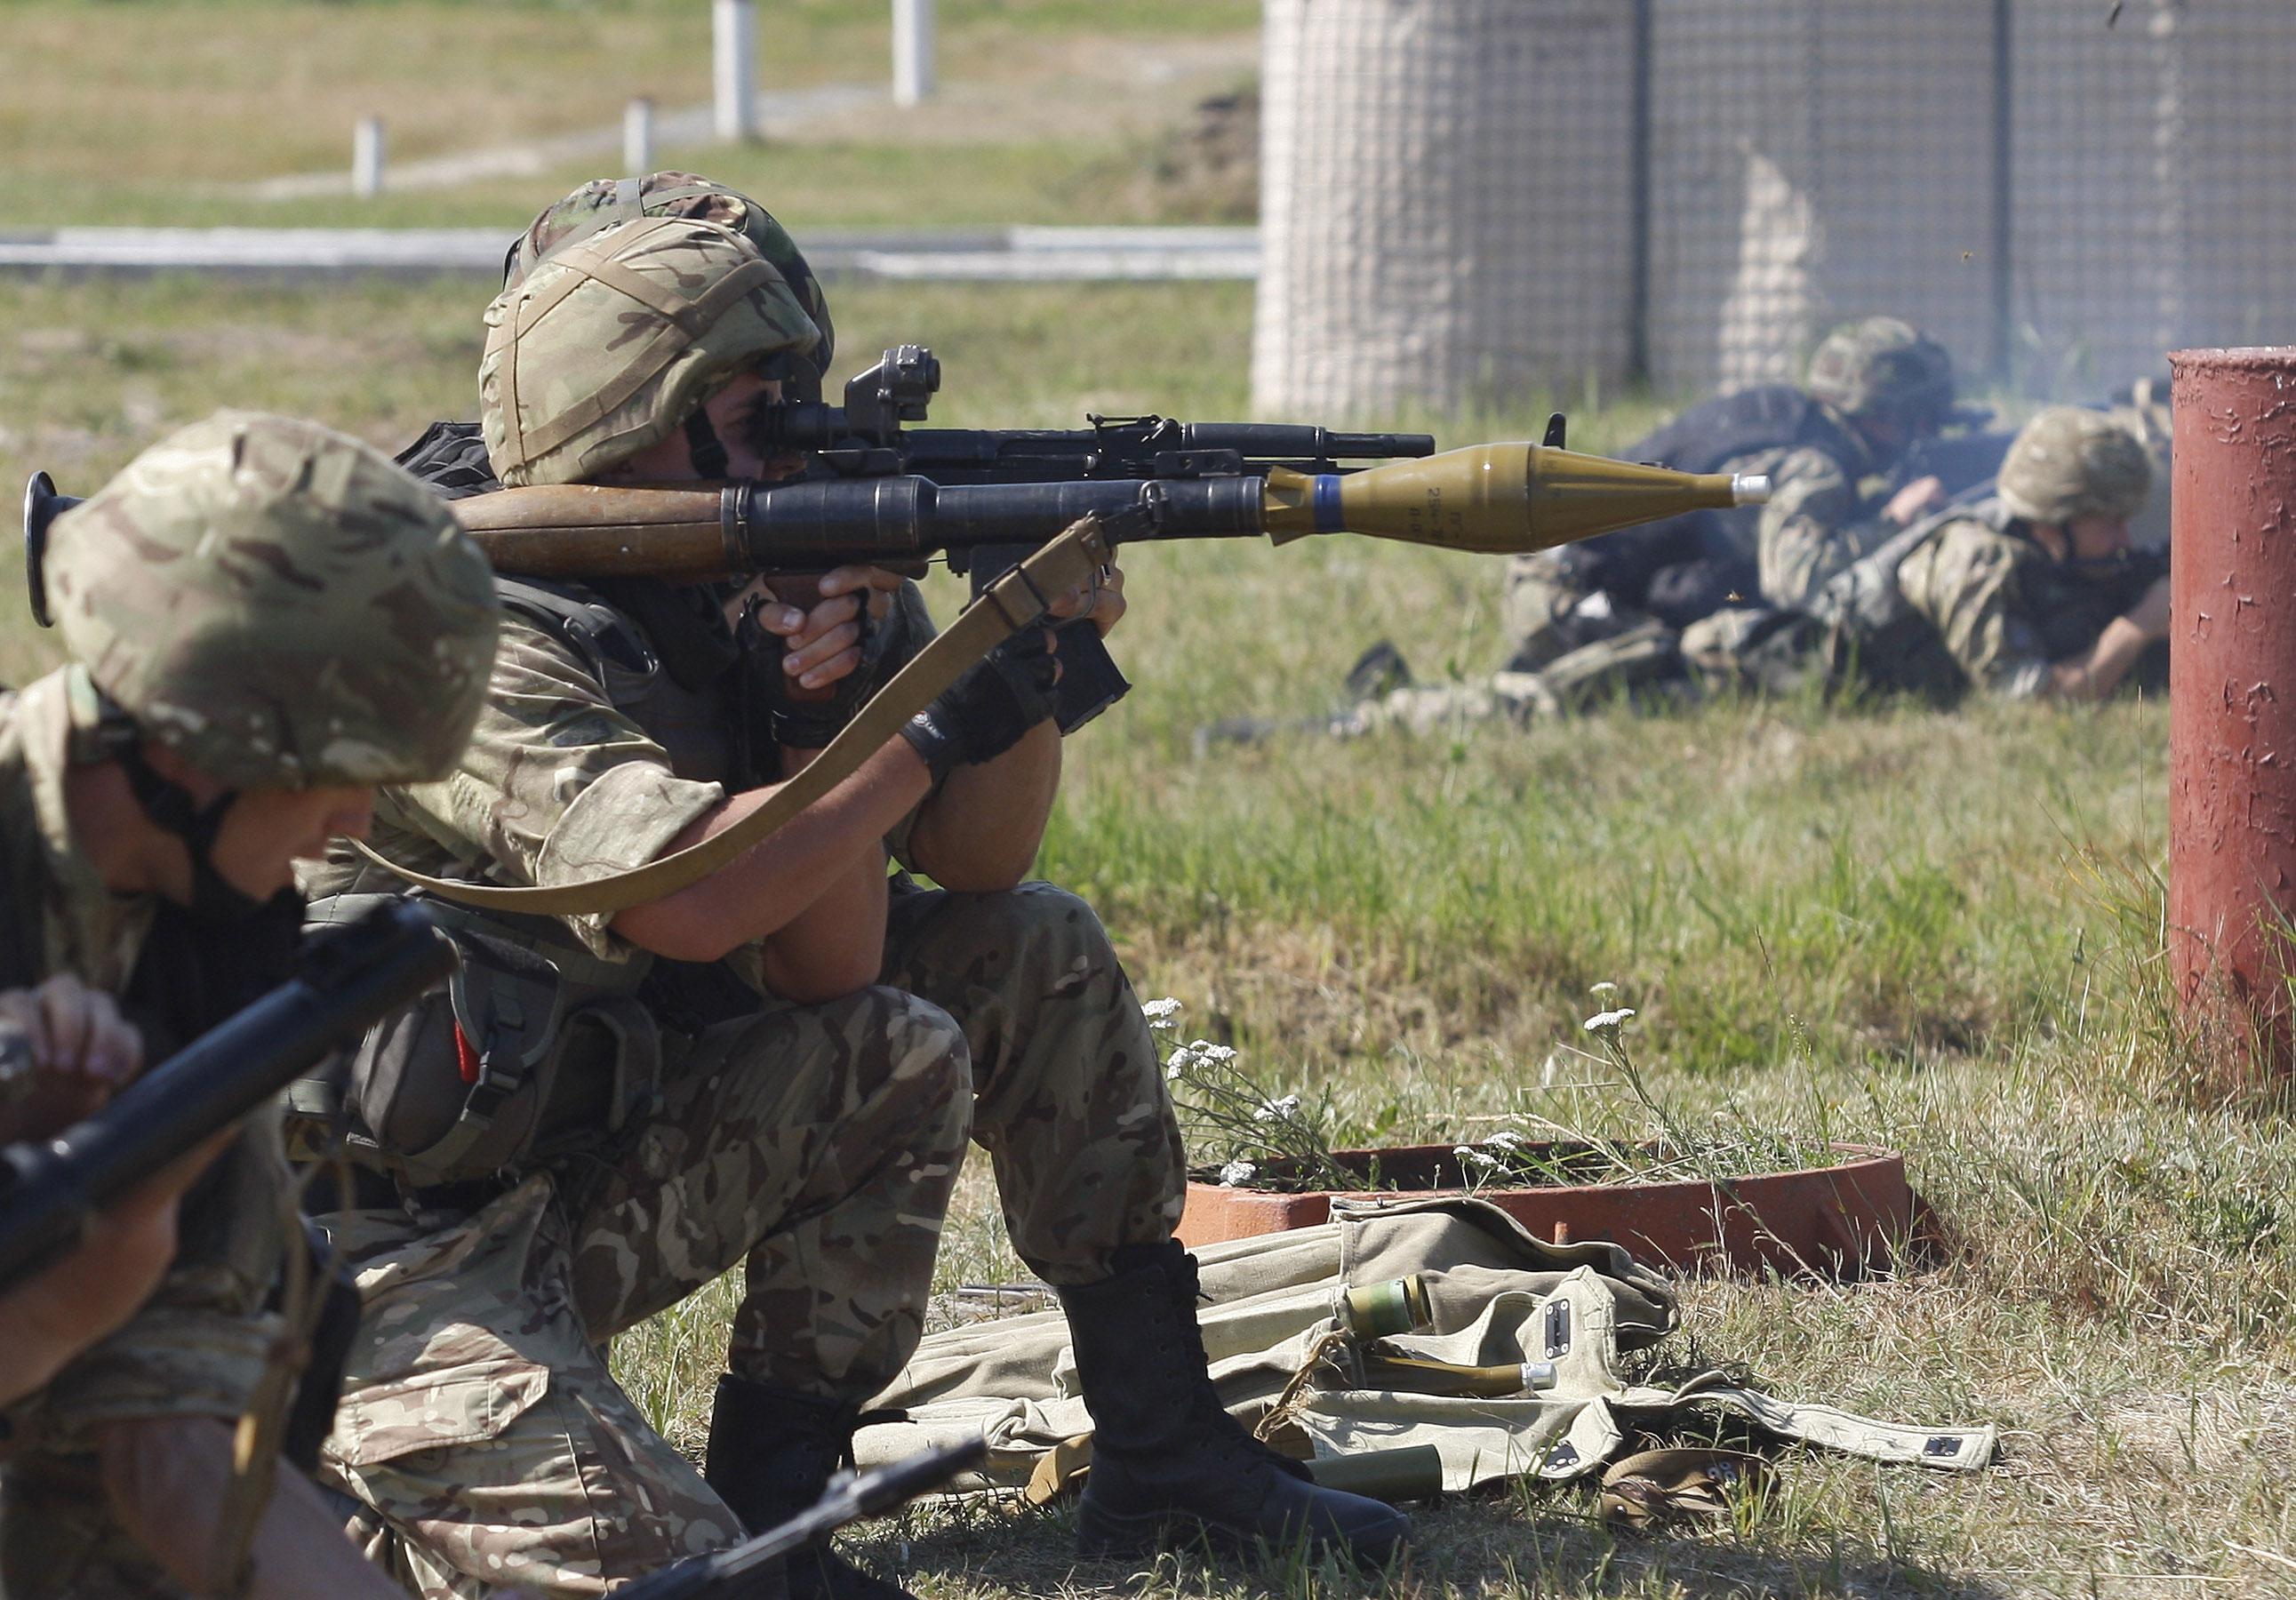 Soldiers of the Ukrainian National Guard train on the shooting range in the village of Novi Petrivtsi, Ukraine, July 22, 2015. (Photo: Str/Zuma Press/Newscom)